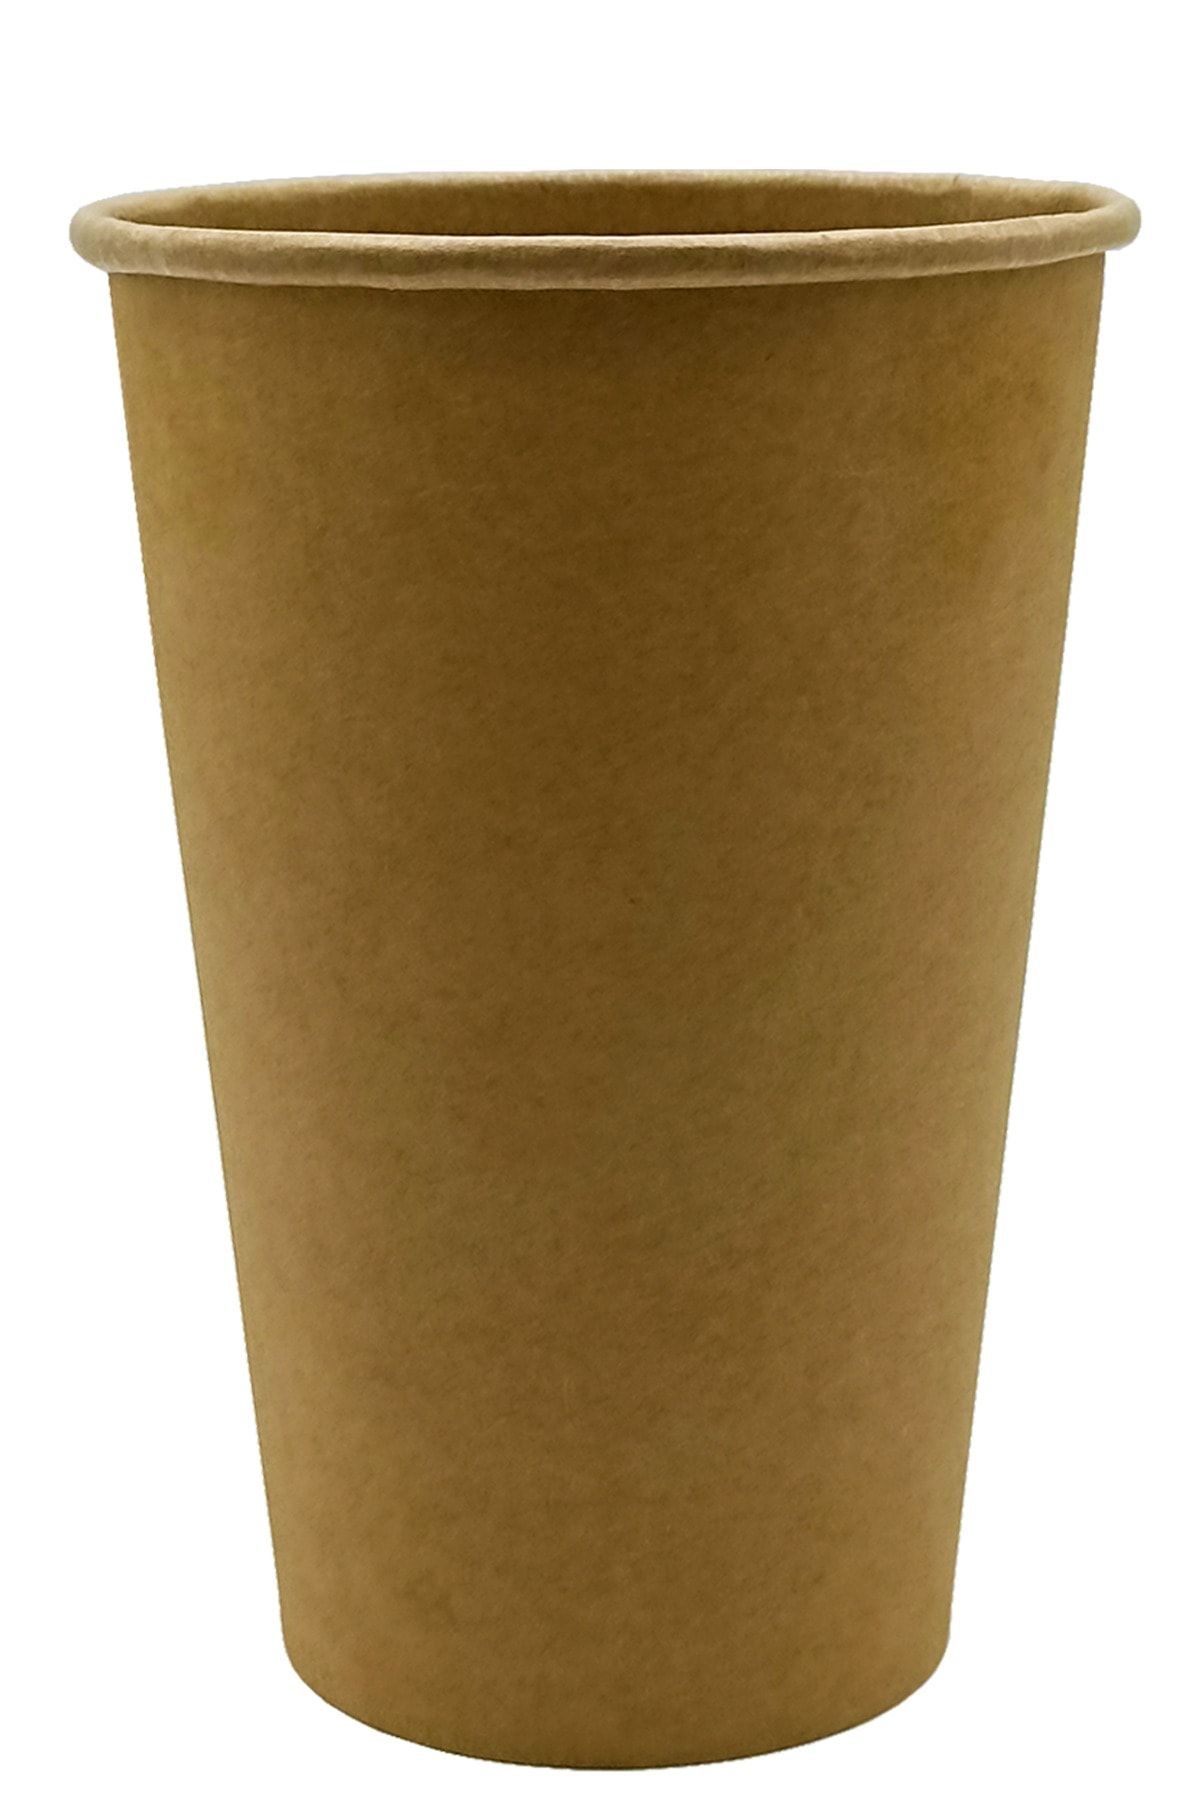 Afra Tedarik 16 Oz Karton Bardak Latte Cappuccino Kraft Kağıt Bardak 480 ml - 150'li